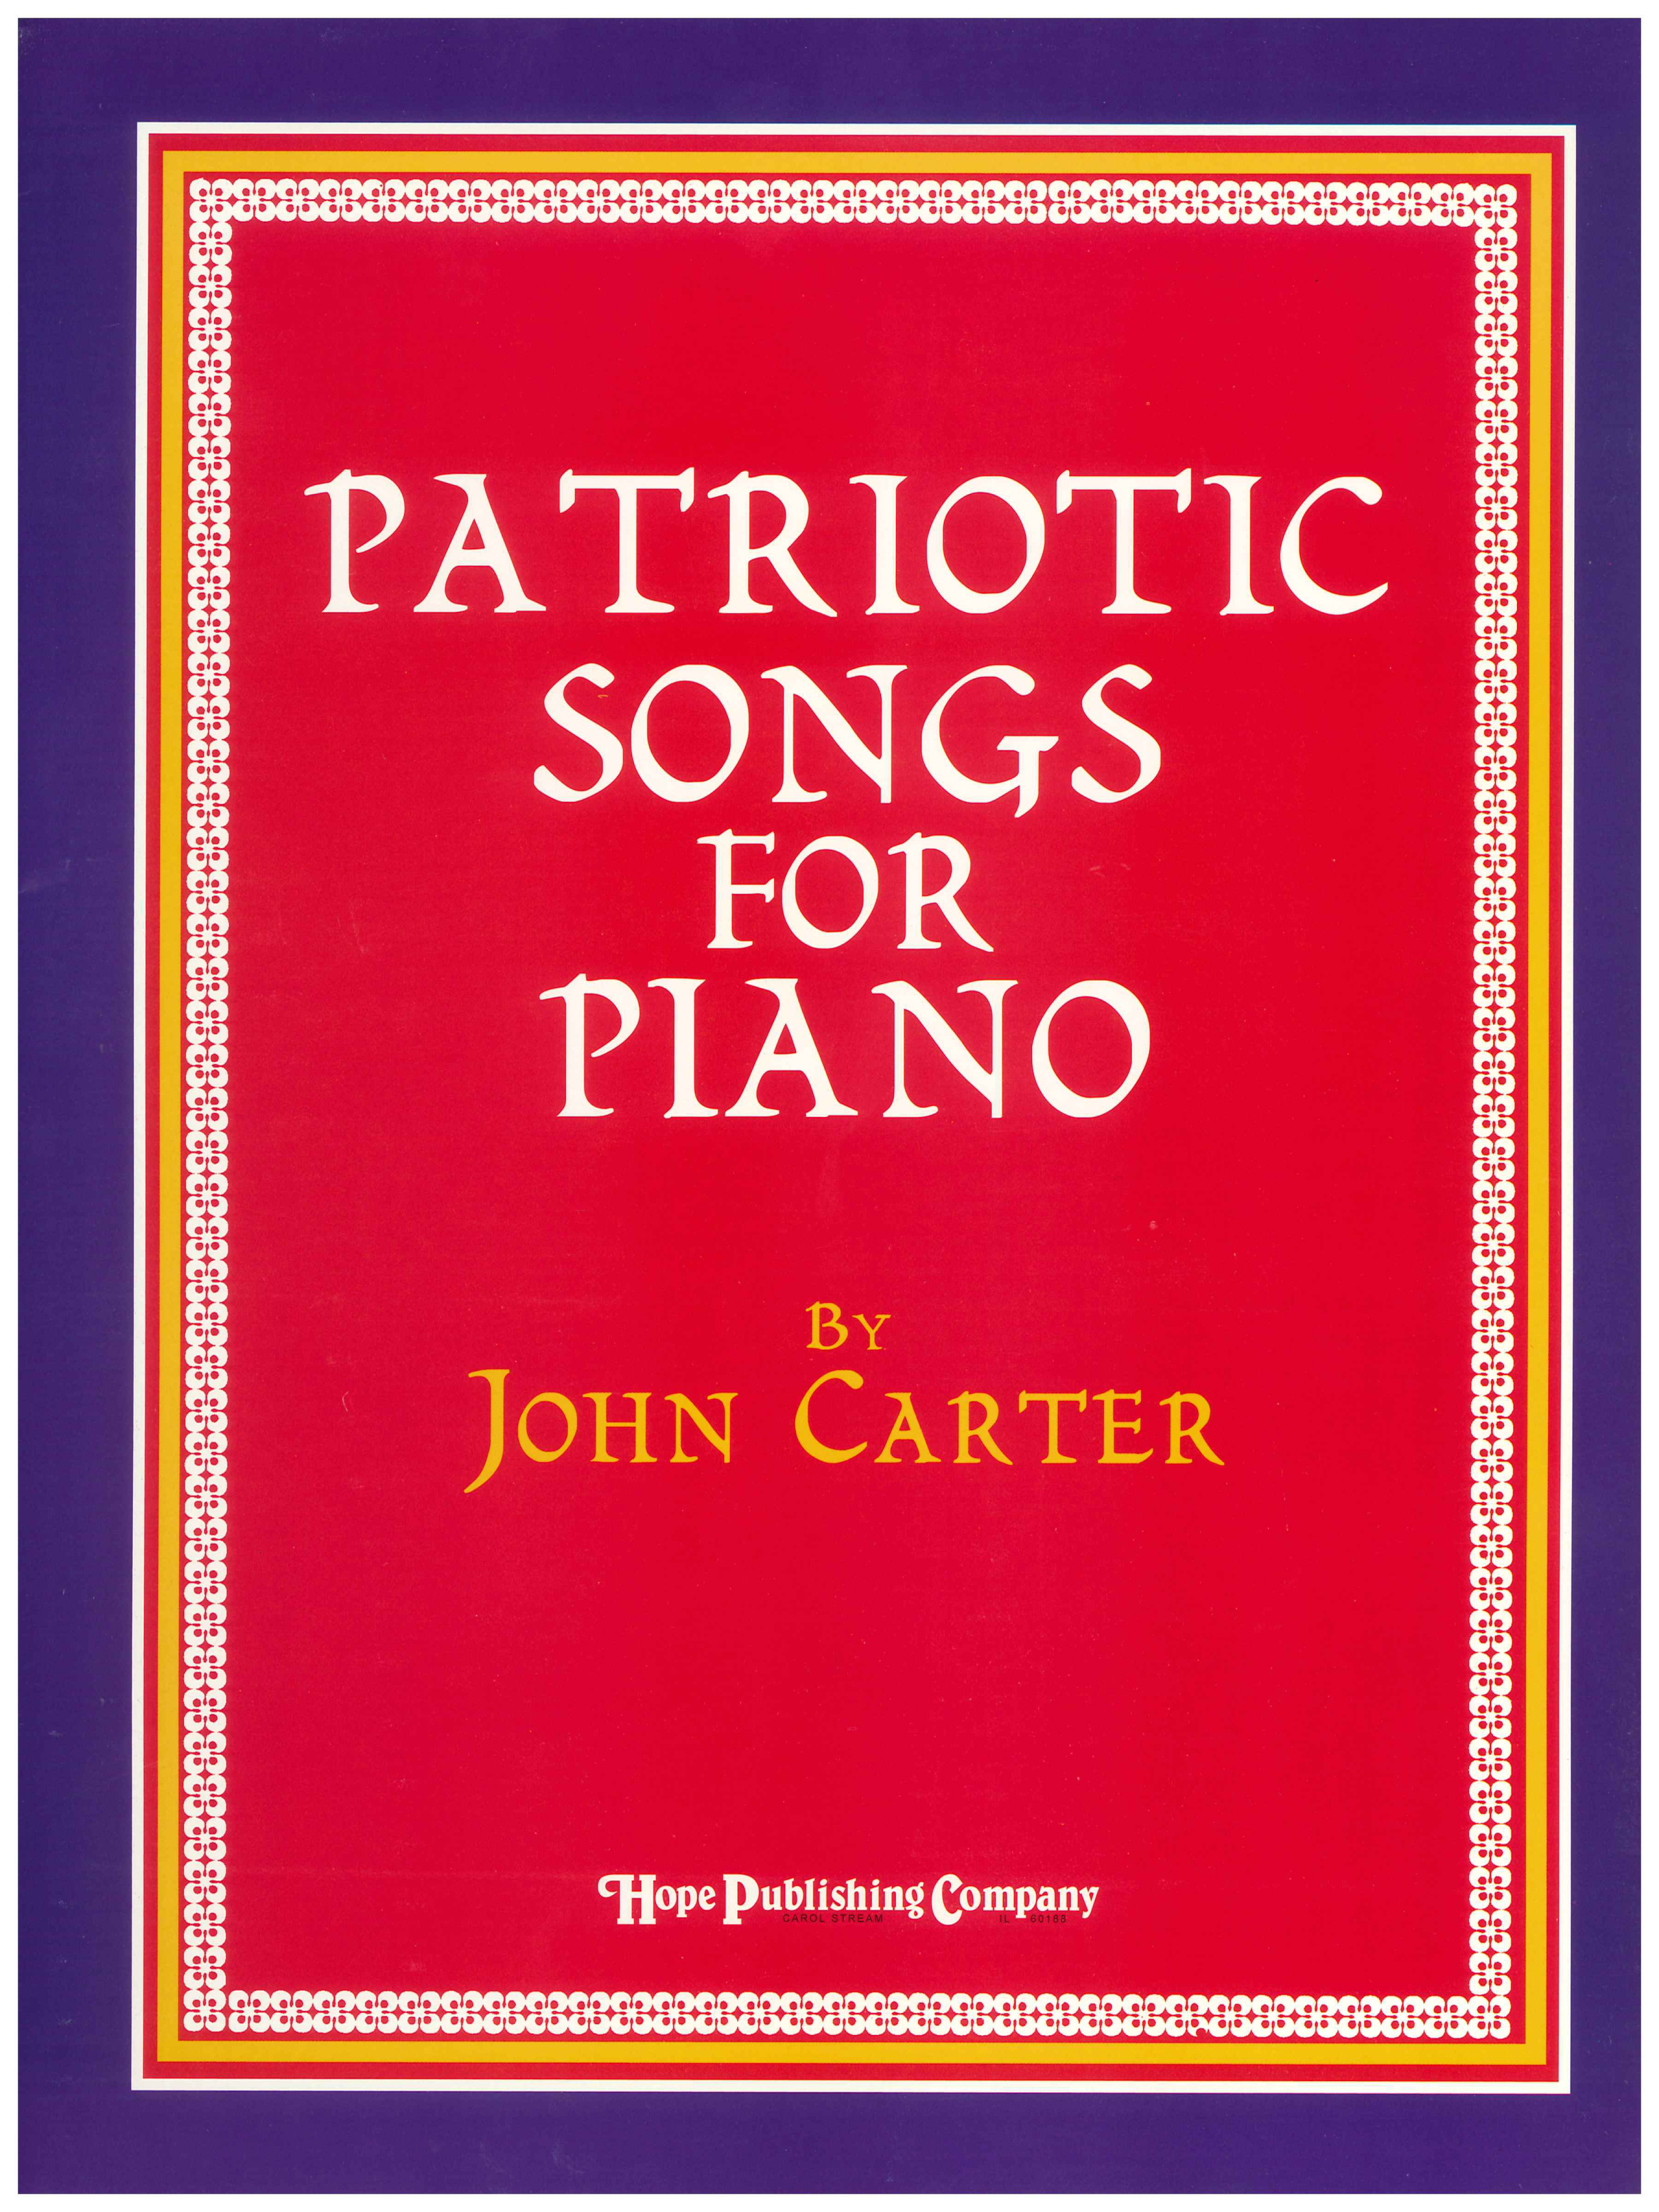 PATRIOTIC SONGS PIANO - Hope Publishing Company